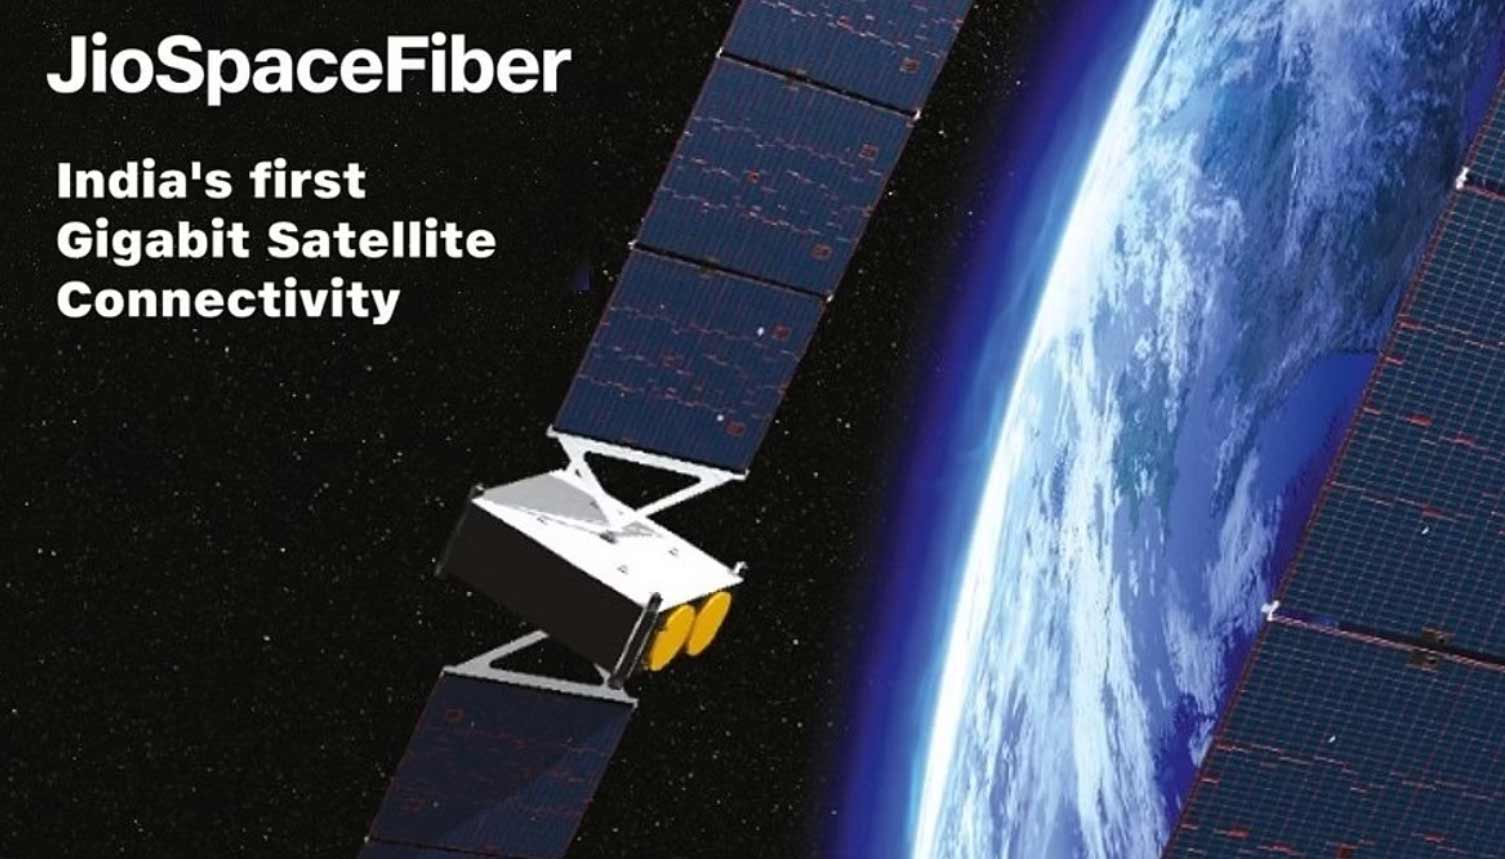 Reliance Jio Launches India's First Satellite-Based Gigabit Broadband Service